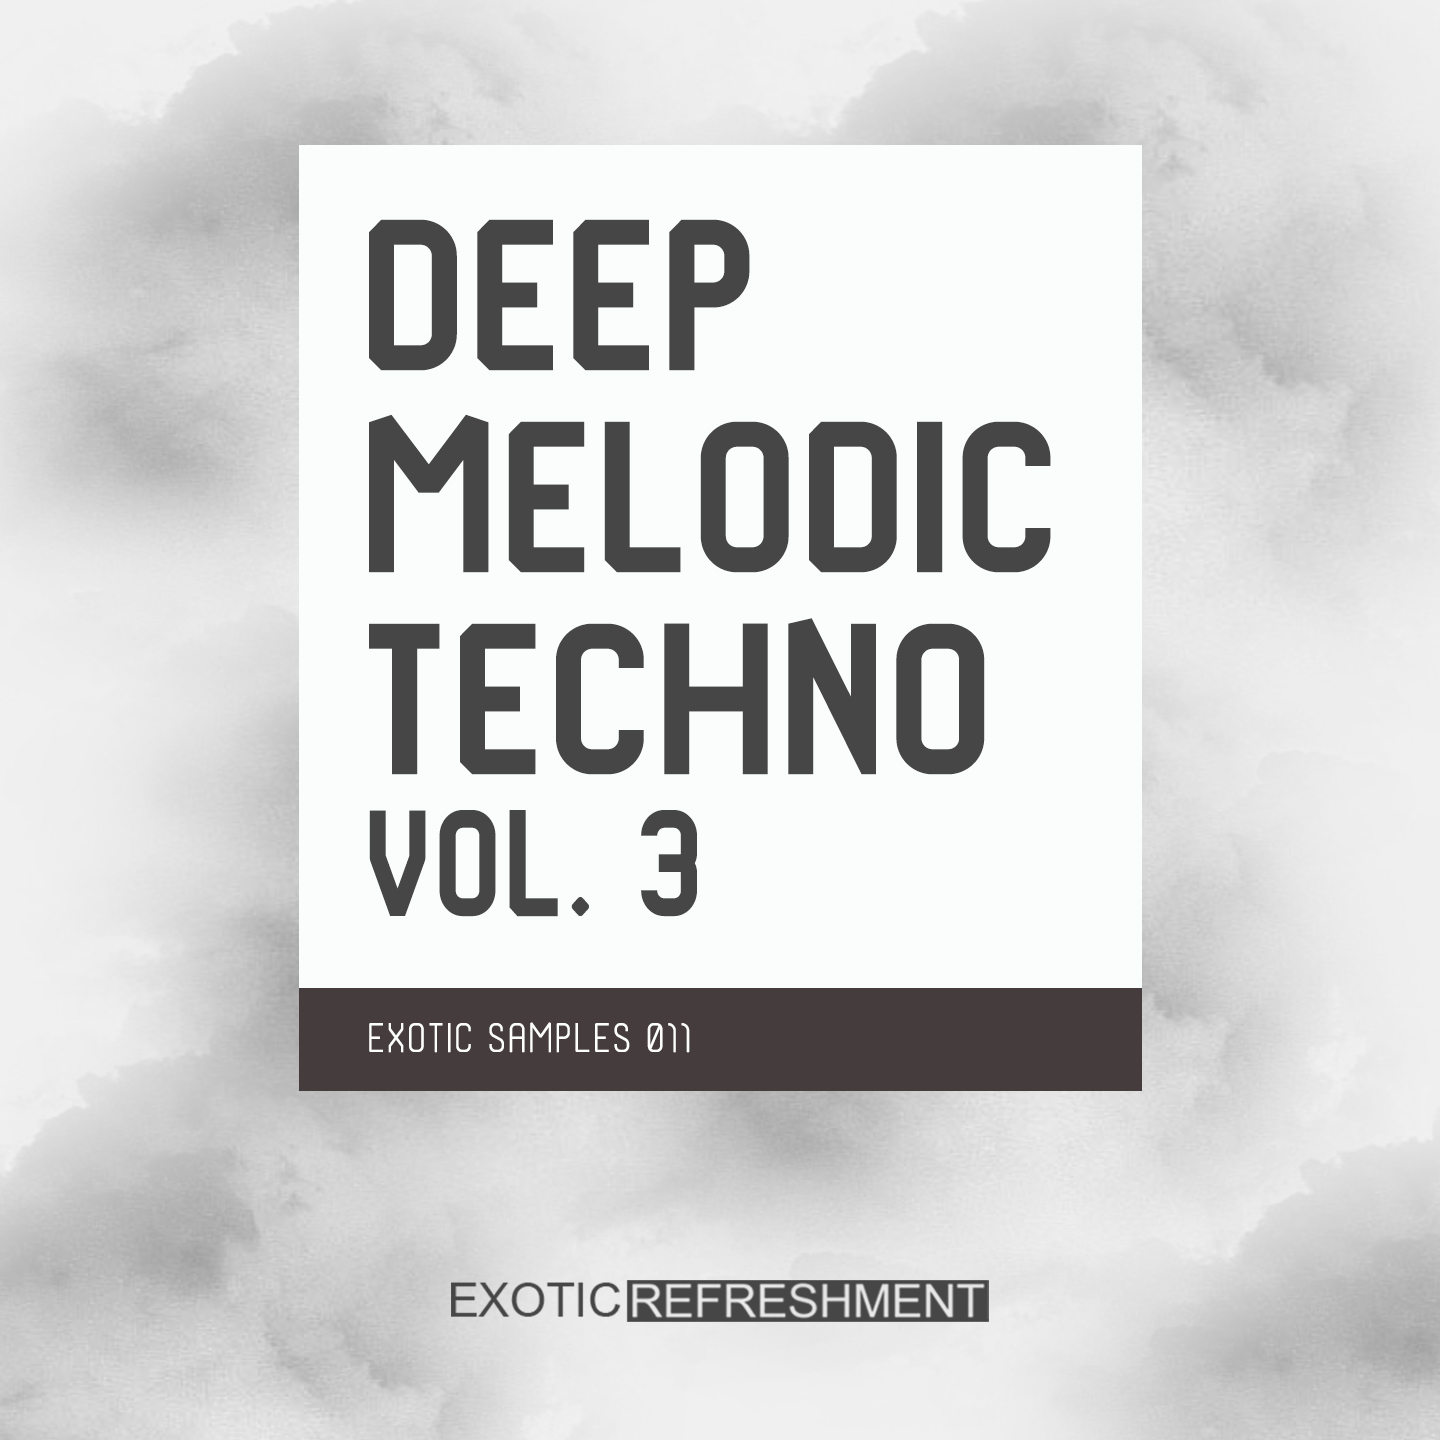 Deep Melodic Techno vol. 3 - Exotic Samples 011